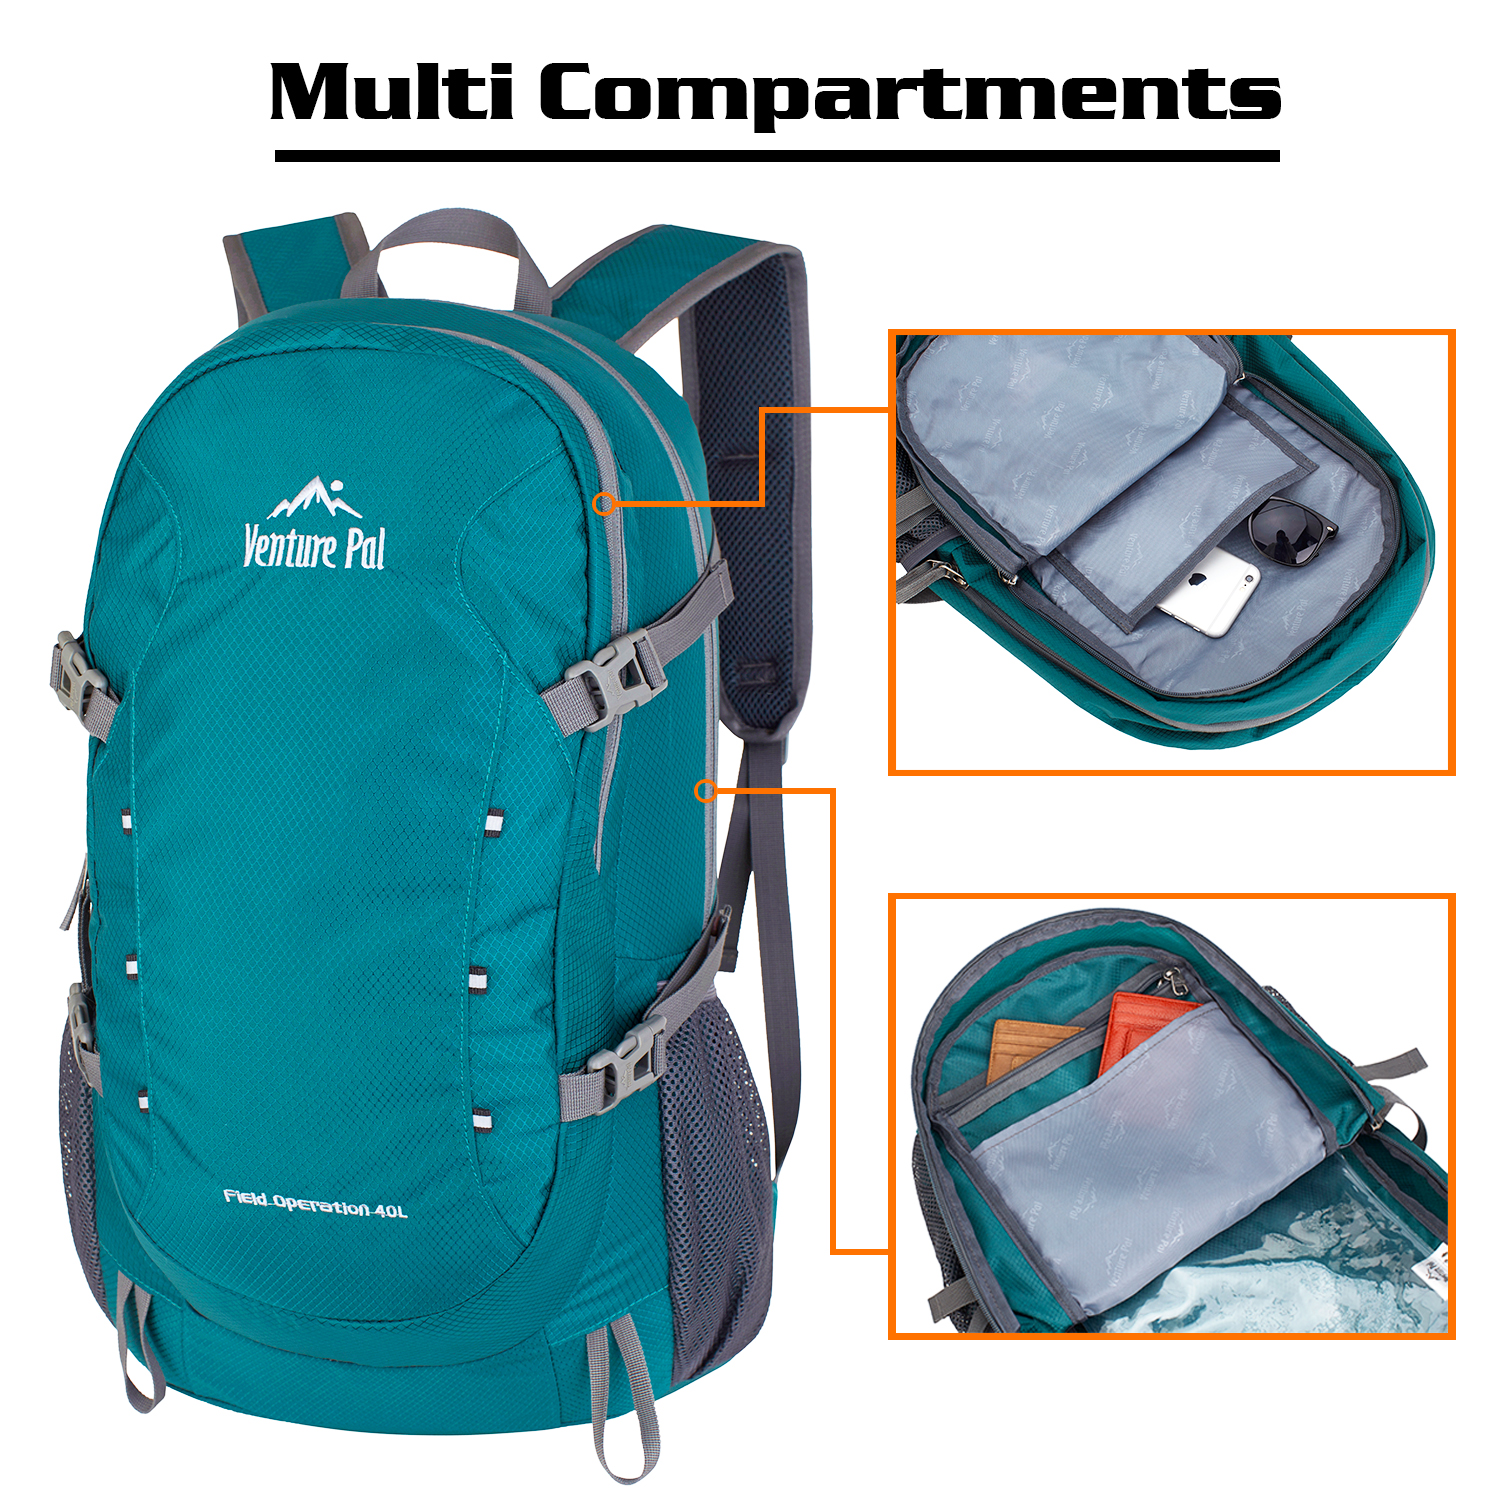 Venture Pal 40L Lightweight Packable Travel Hiking Backpack - image 3 of 7